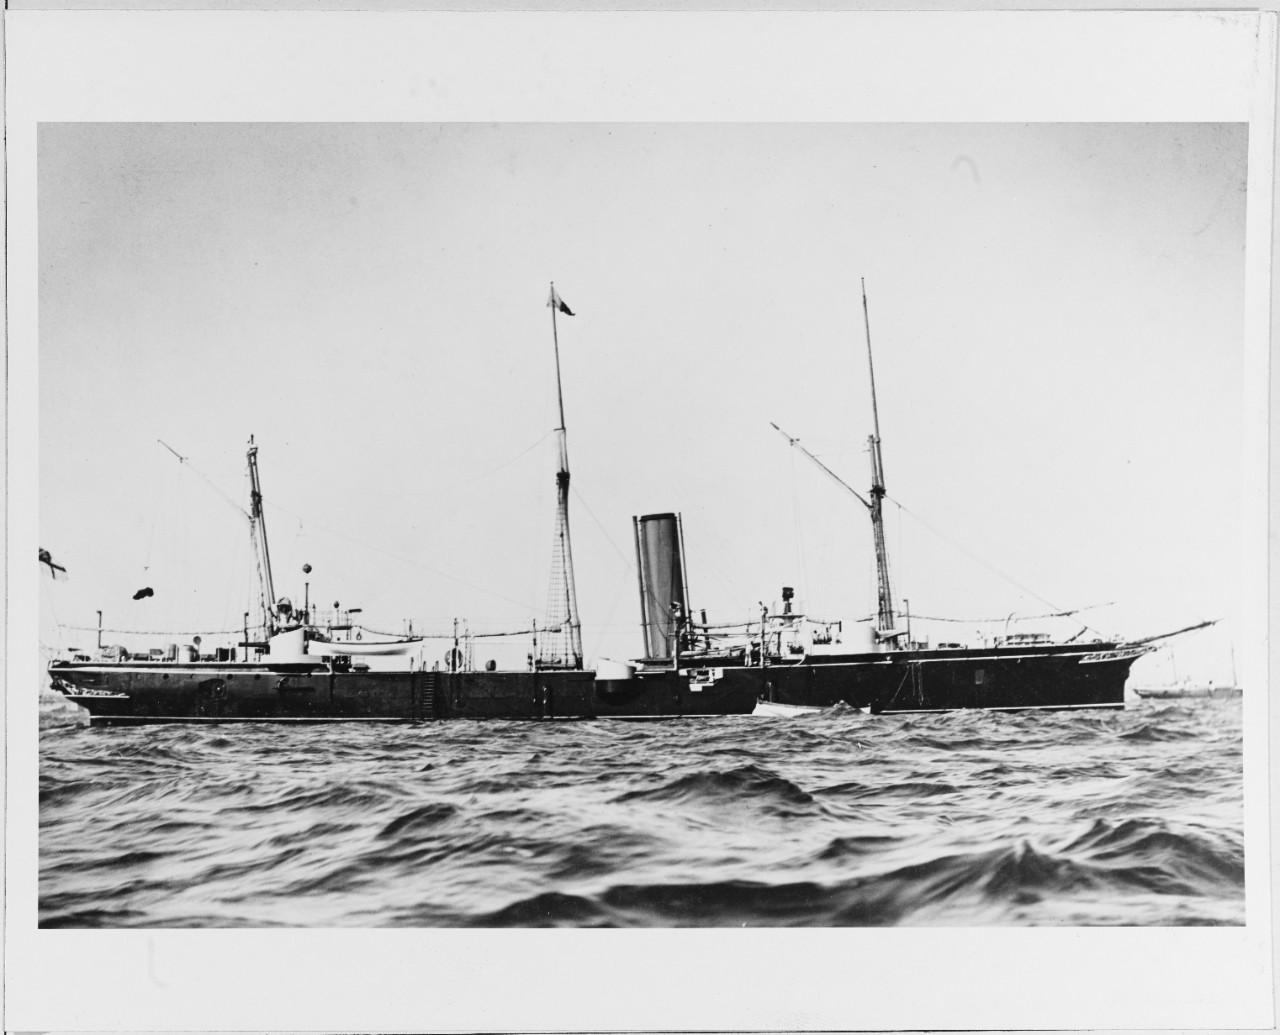 HMS RACOON (British cruiser, 1887)